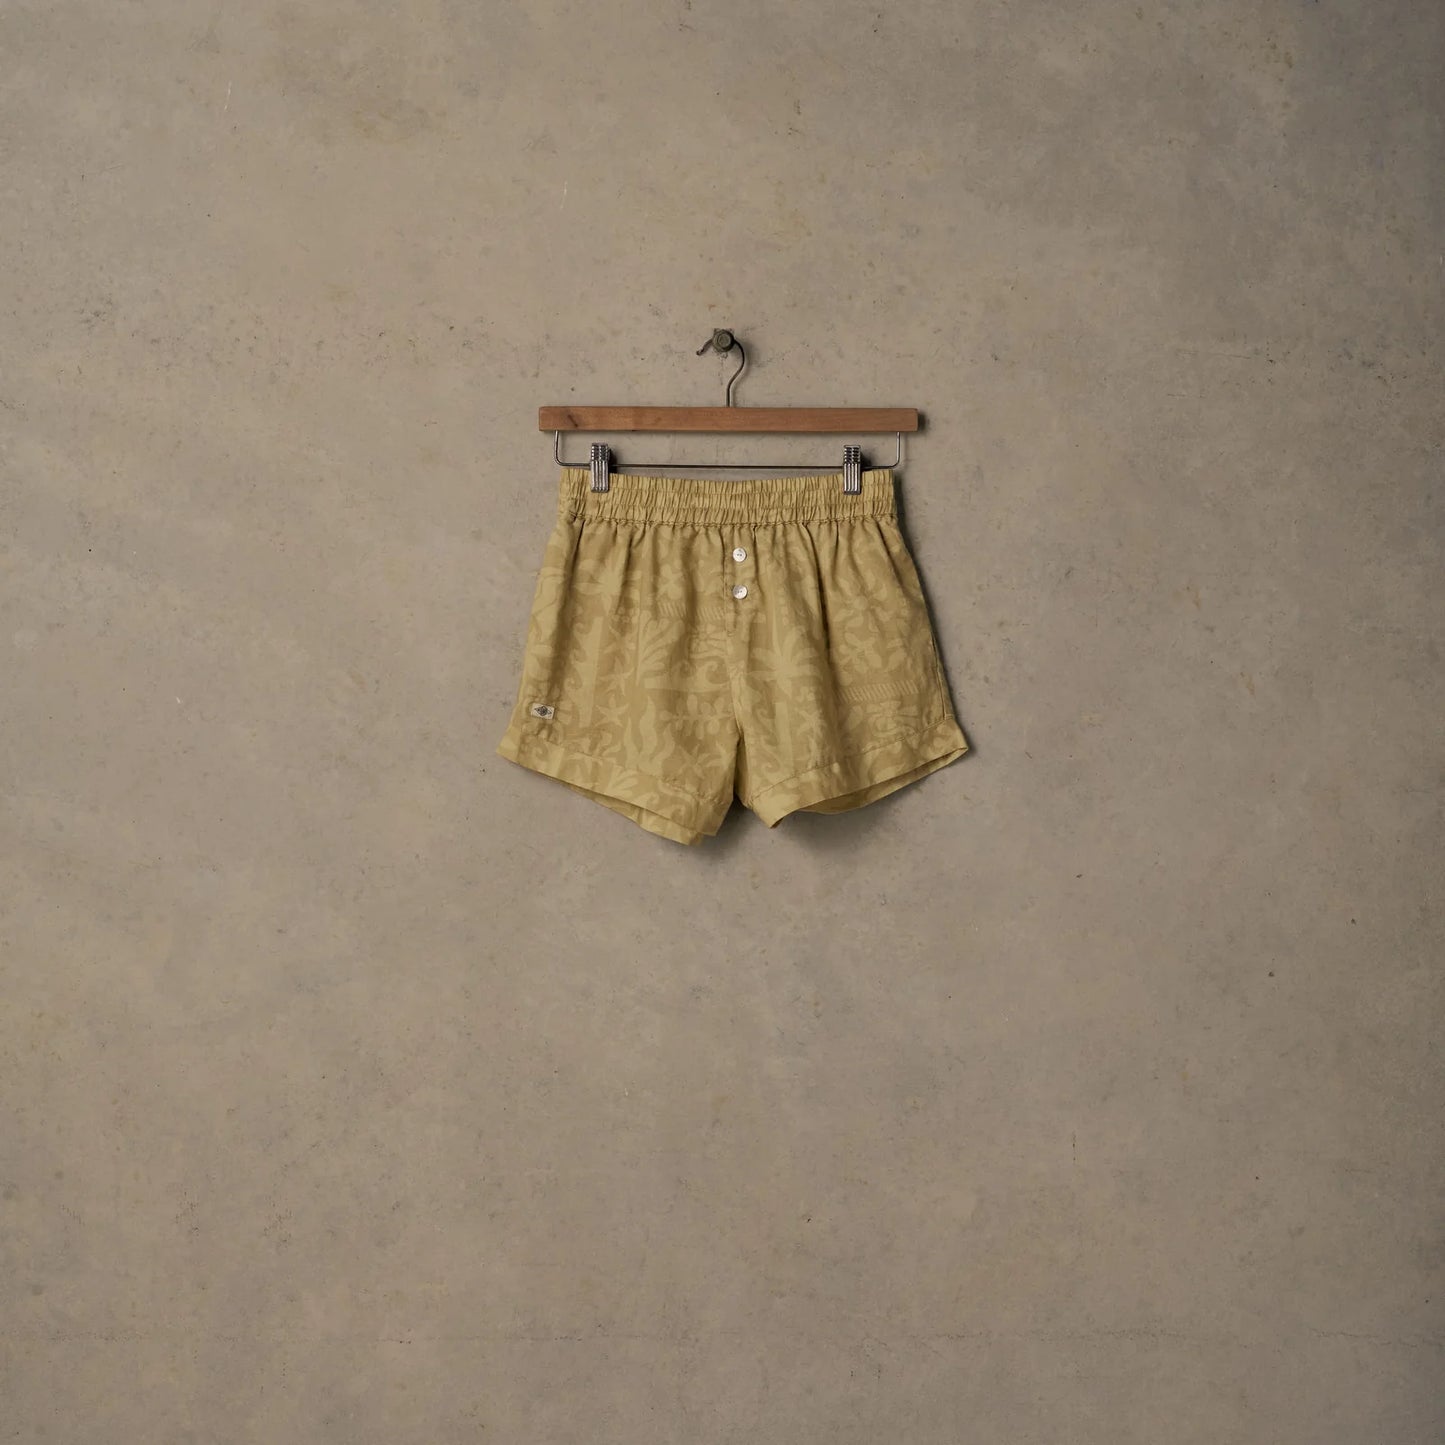 McTAVISH - Oceania Shorts - Golden Sand